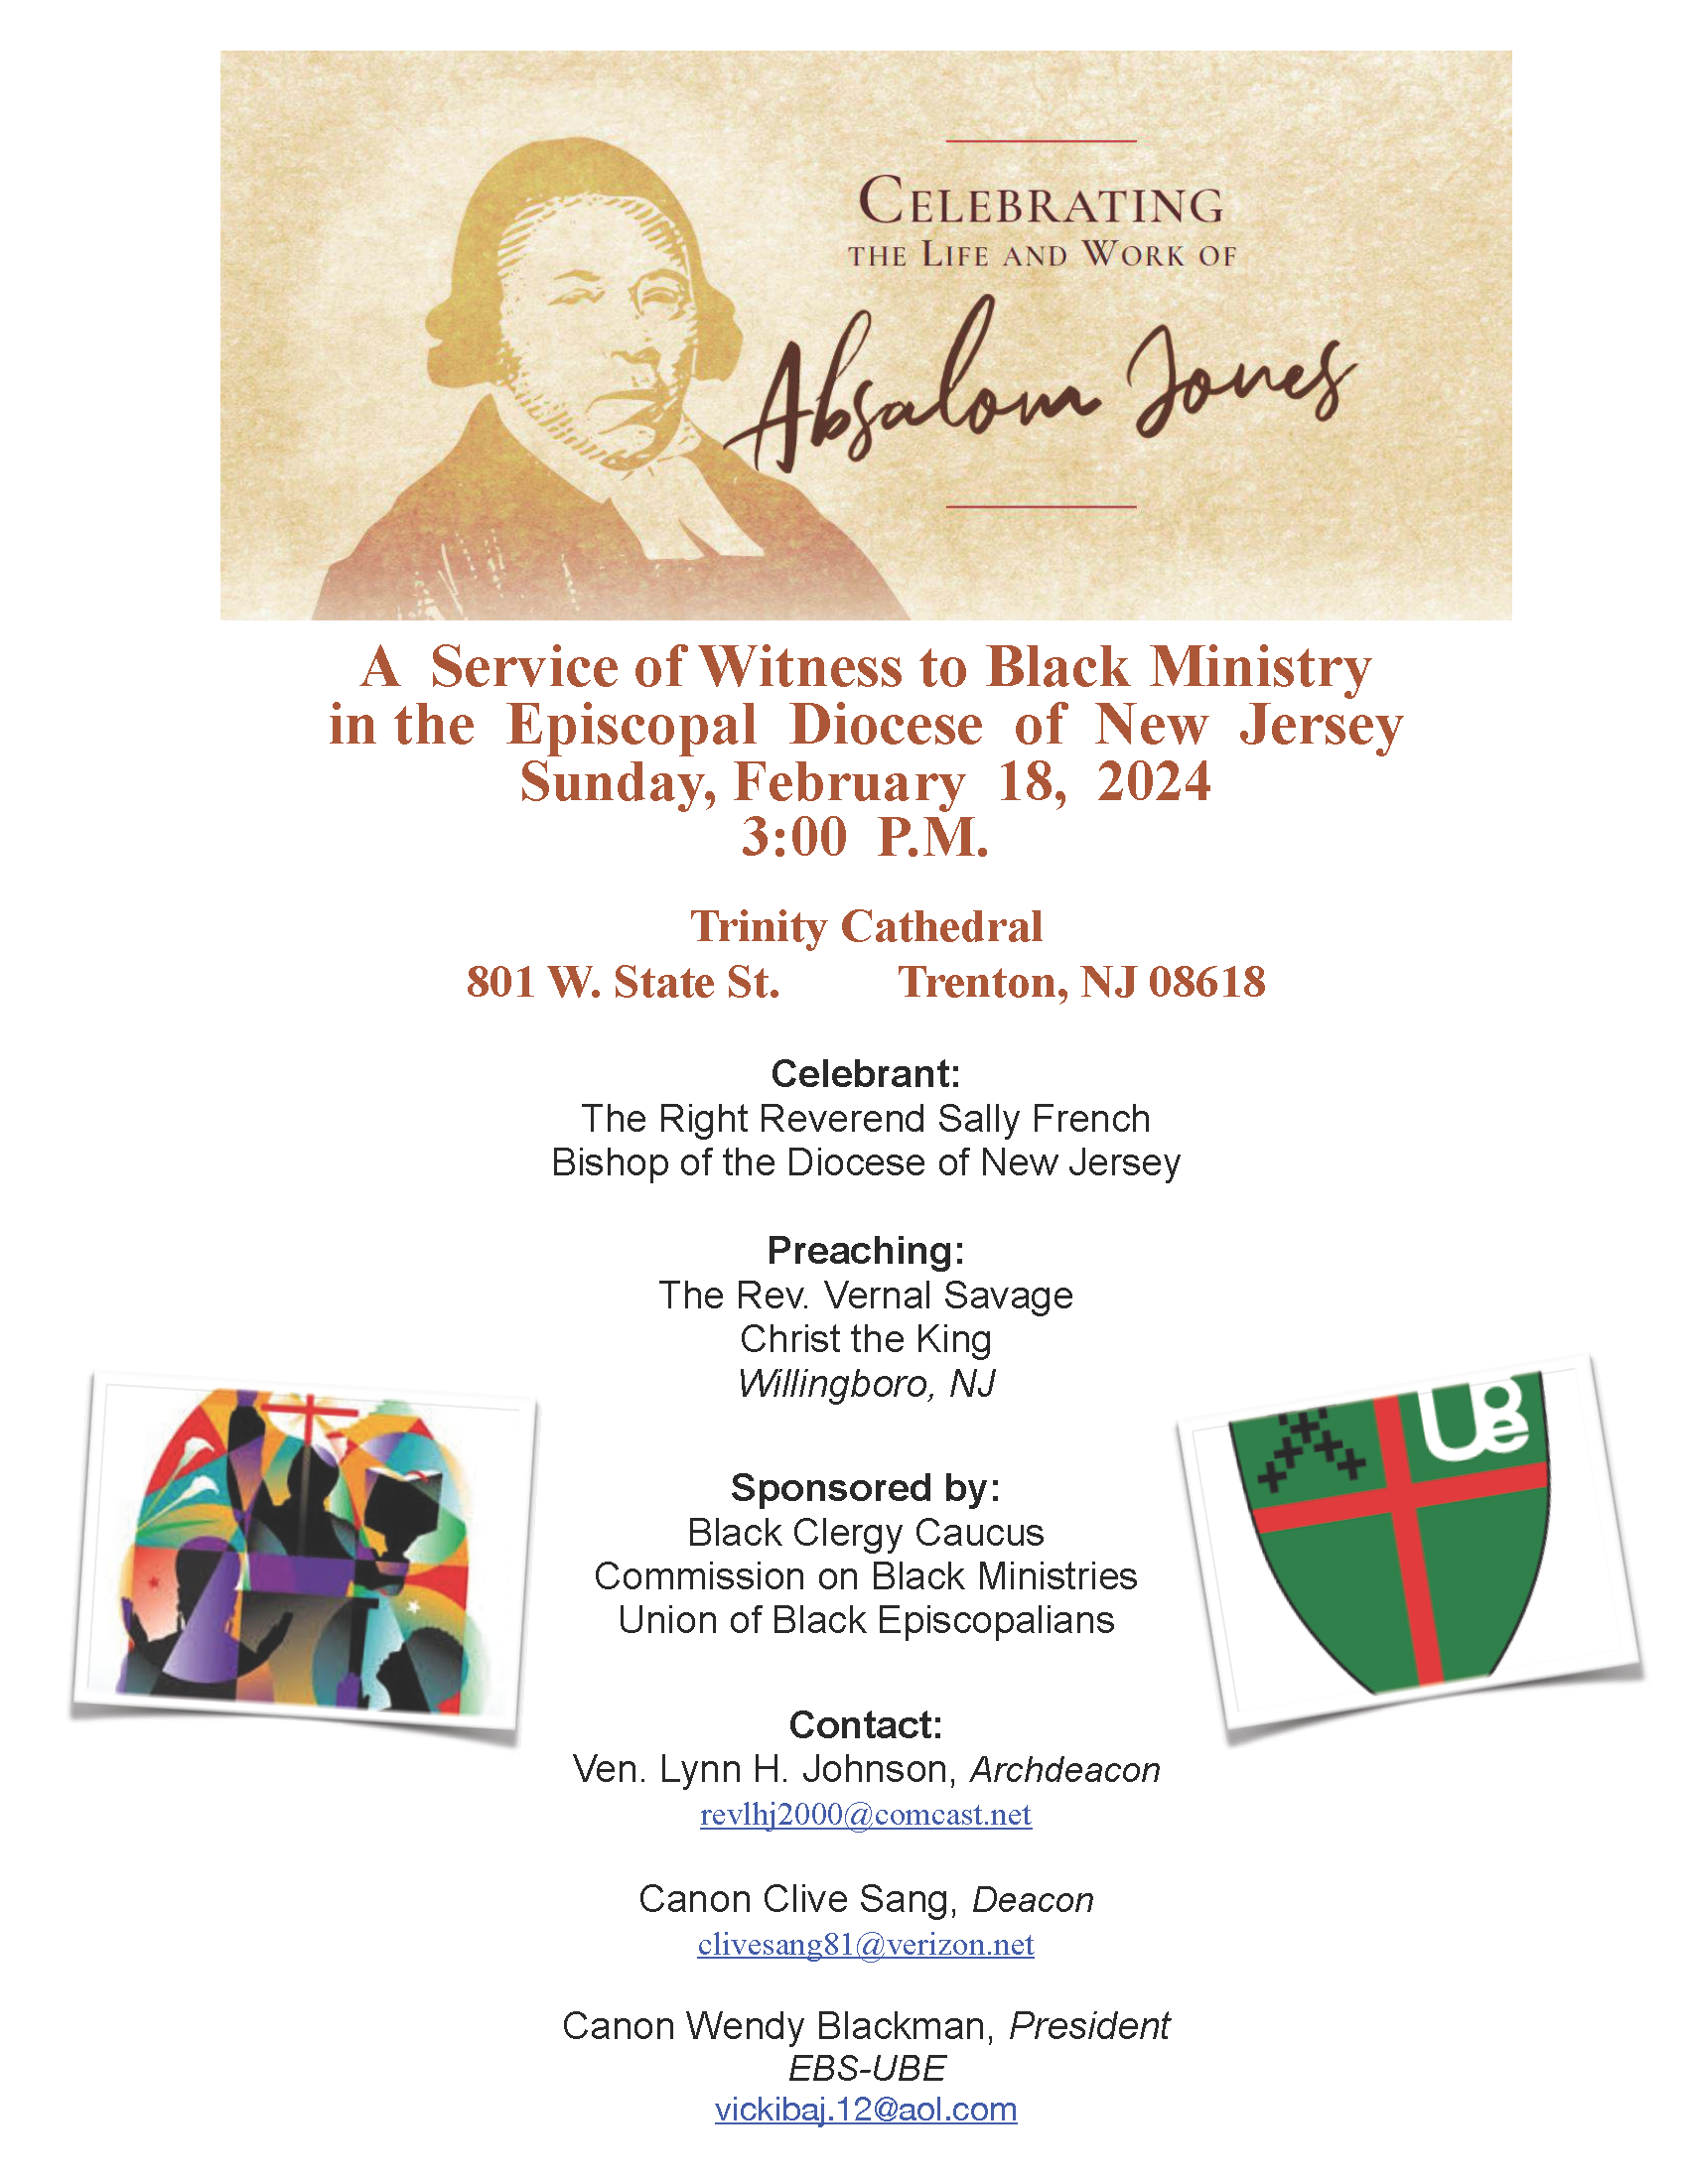 Absalom Jones Service of Witness to Black Ministry